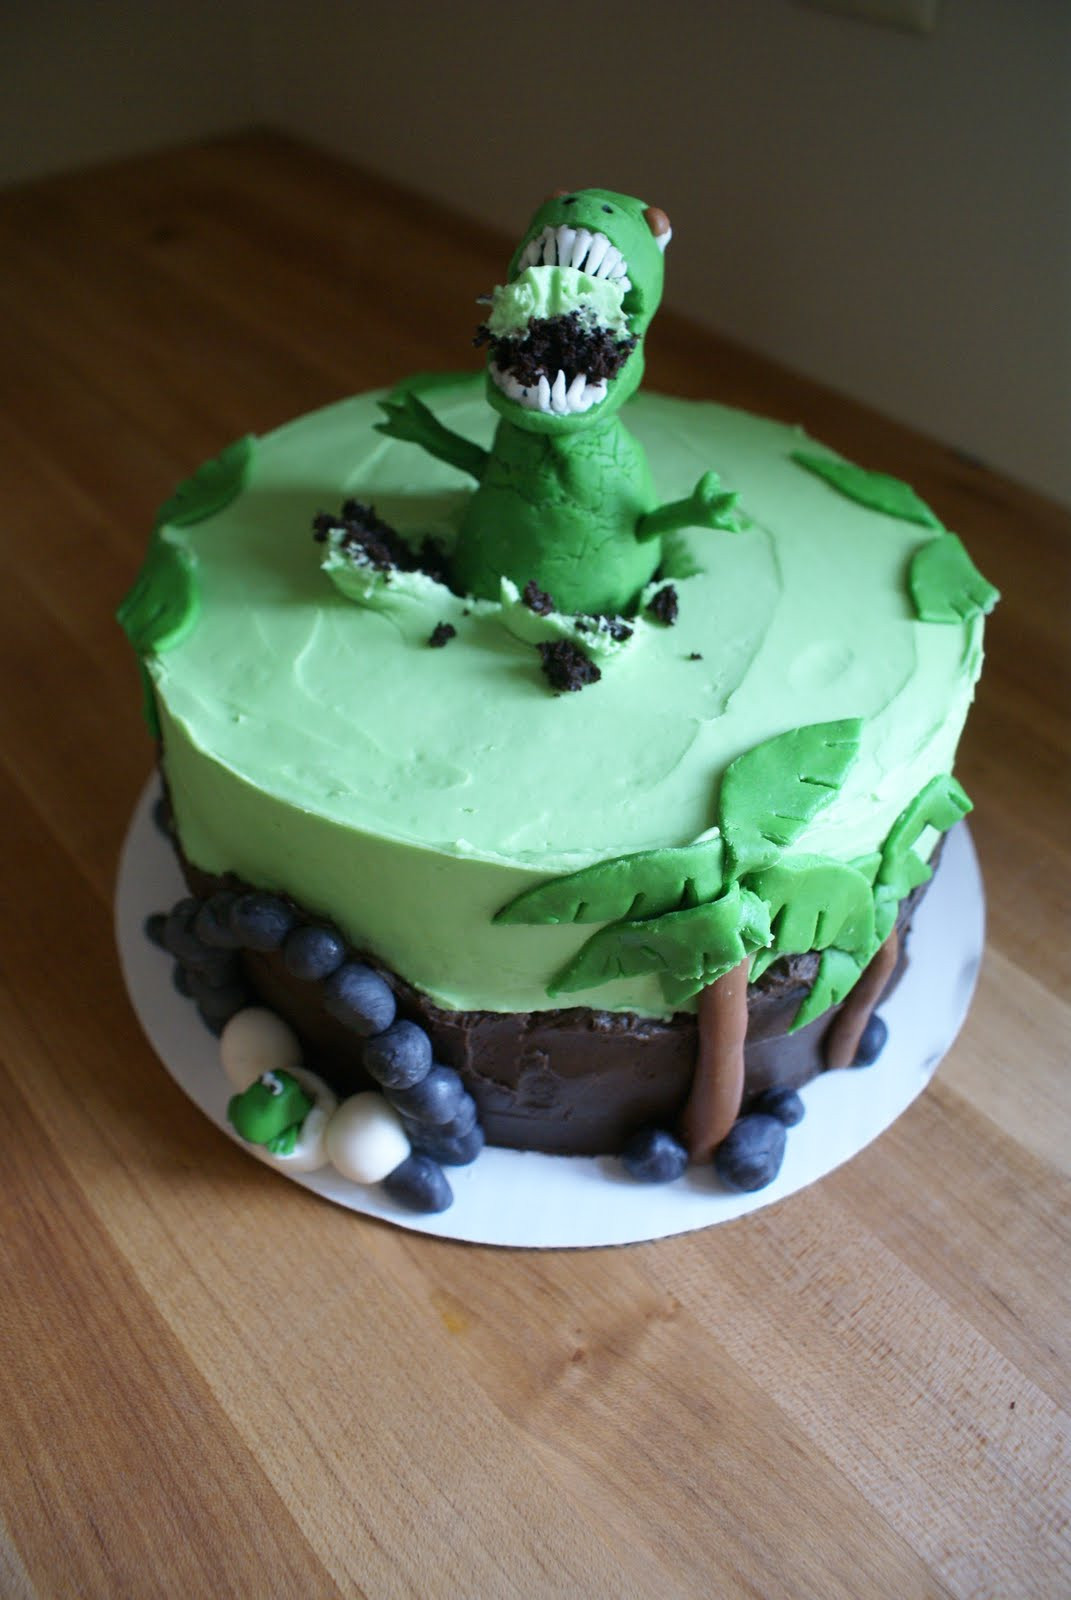 Best ideas about Dinosaur Birthday Cake
. Save or Pin The Cooking of Joy Dinosaur Birthday Cake Now.